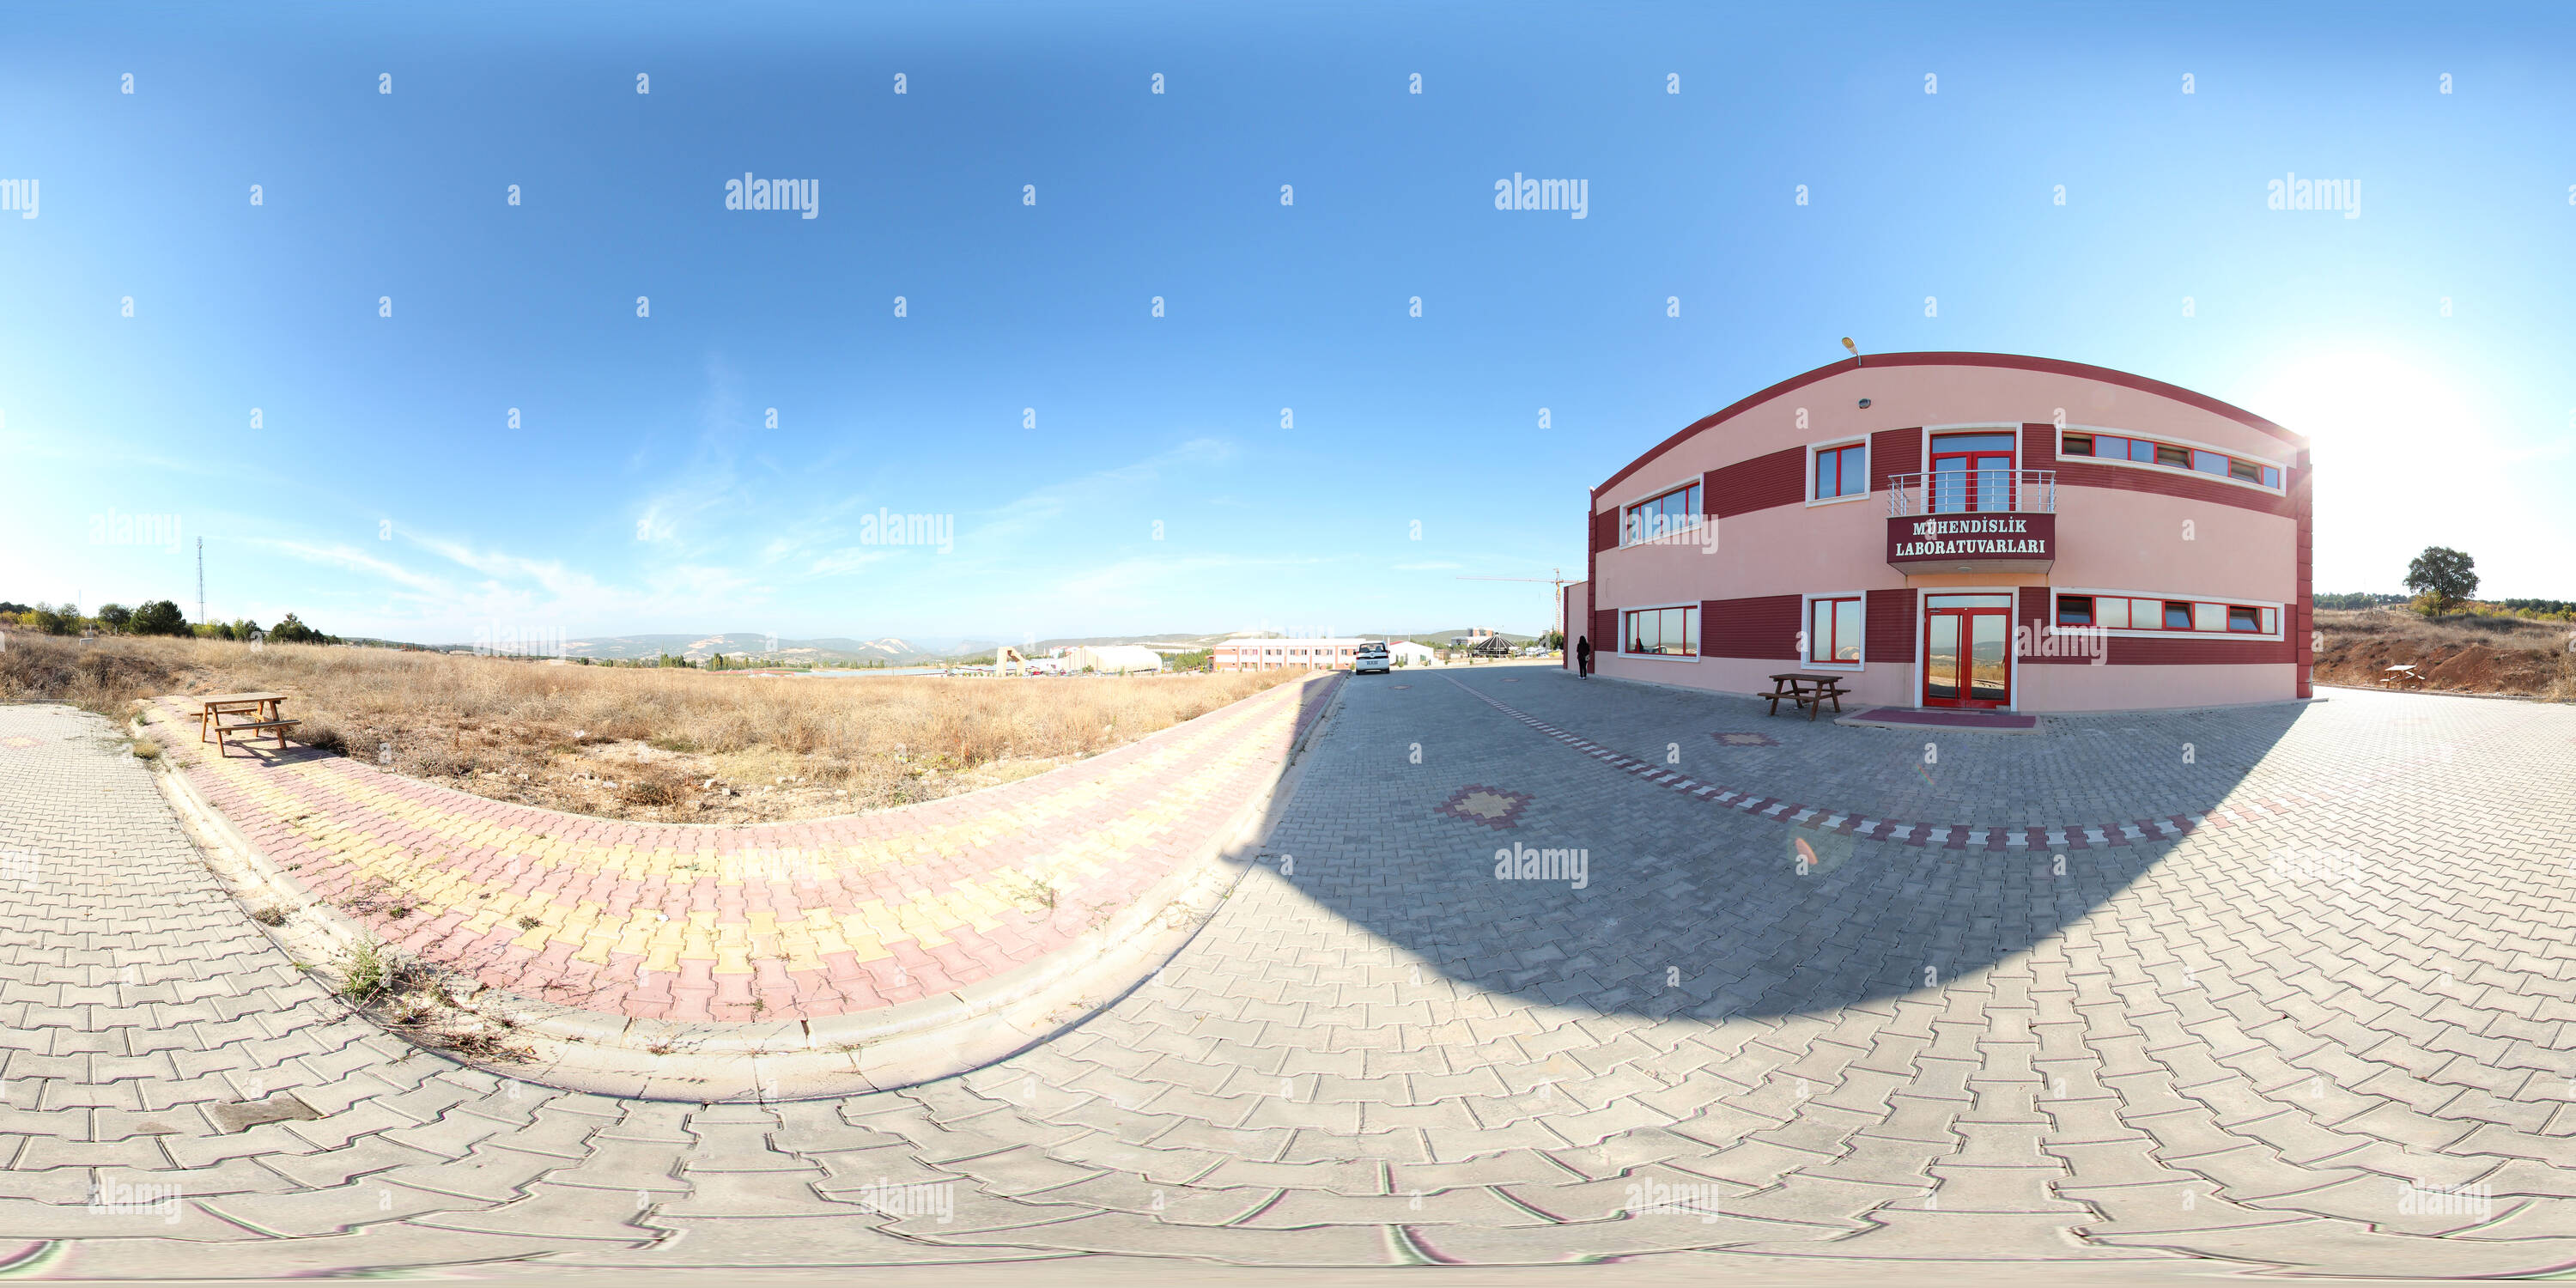 360 degree panoramic view of 245738 - Mühendislik Laboratuvarları - Bilecik Sanal Tur